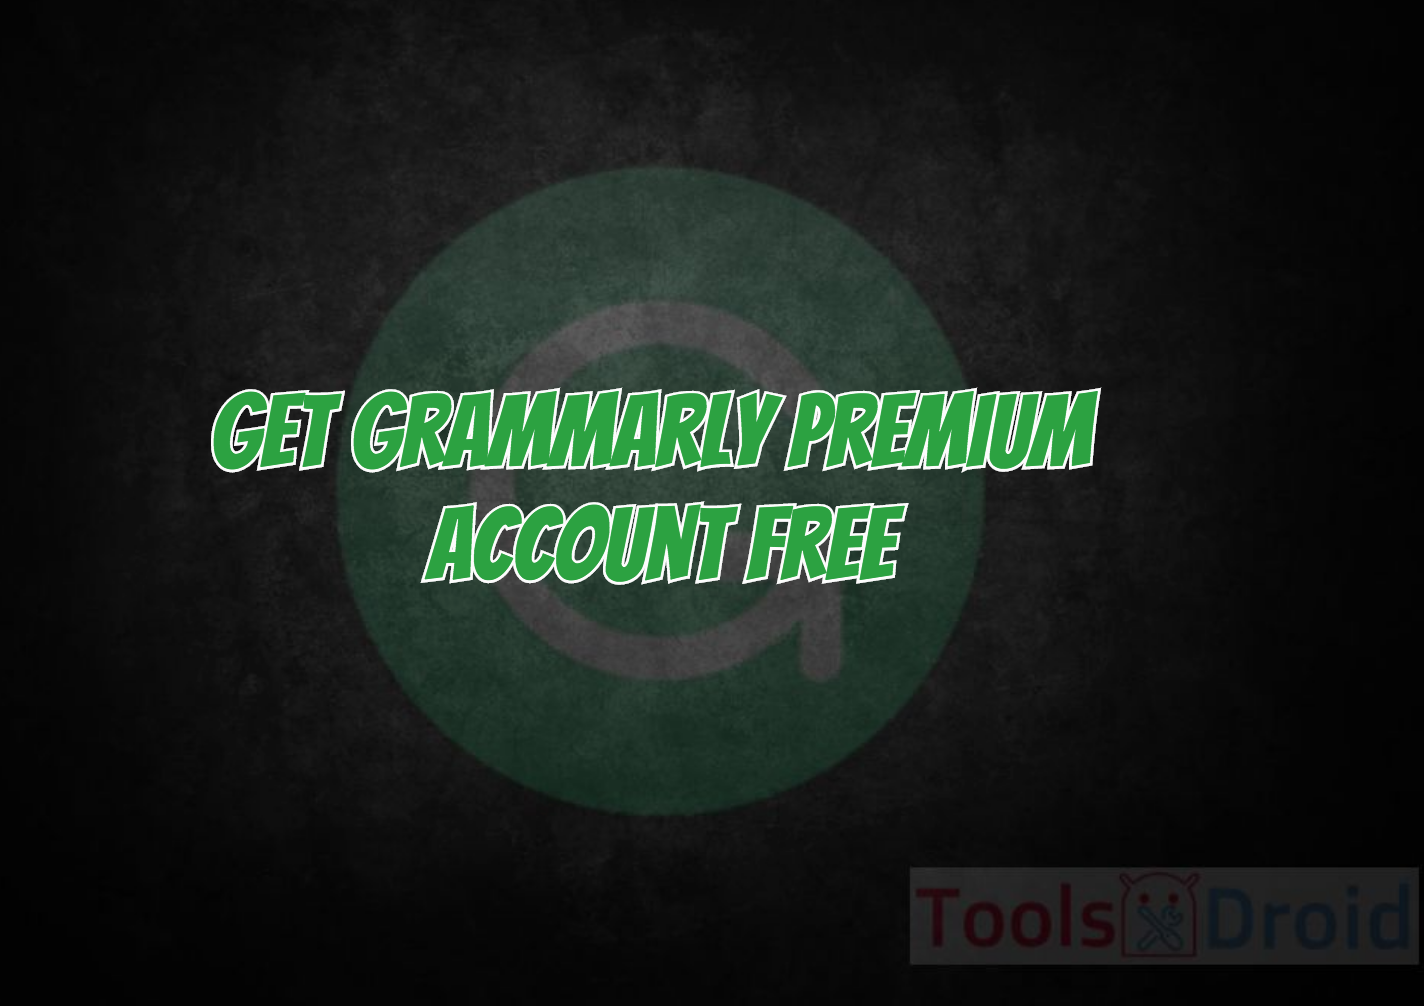 grammarly premium 2018 free